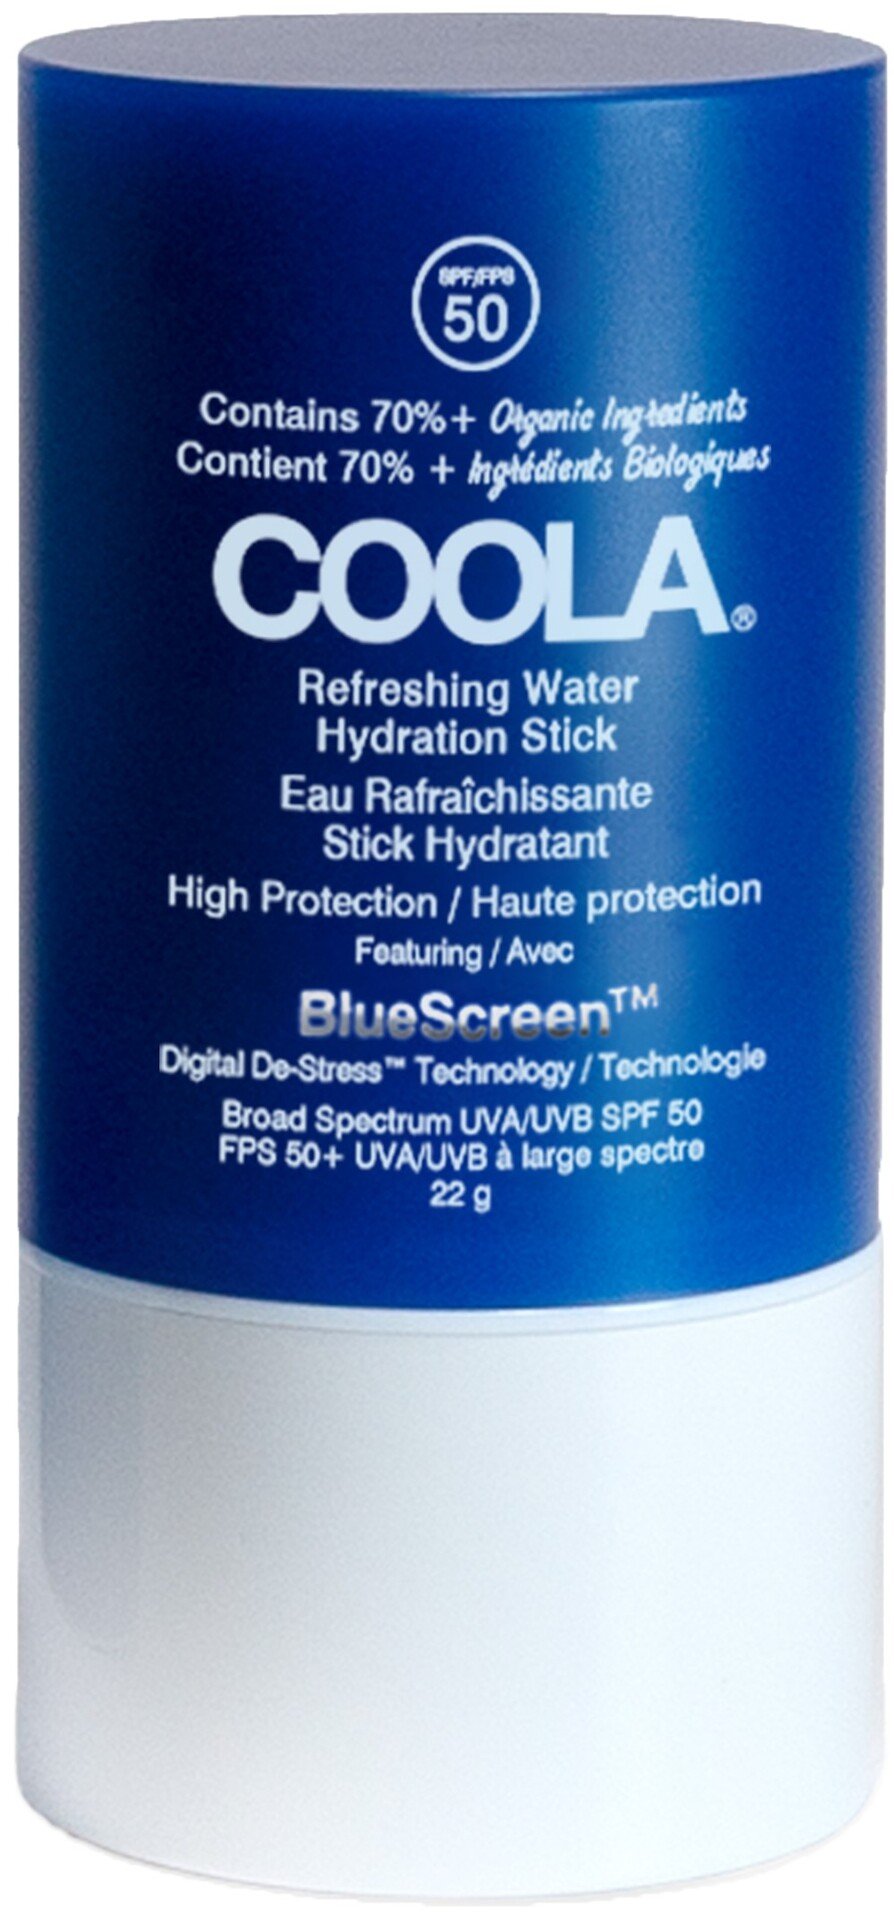 COOLA Refreshing Water Hydration Stick 22g